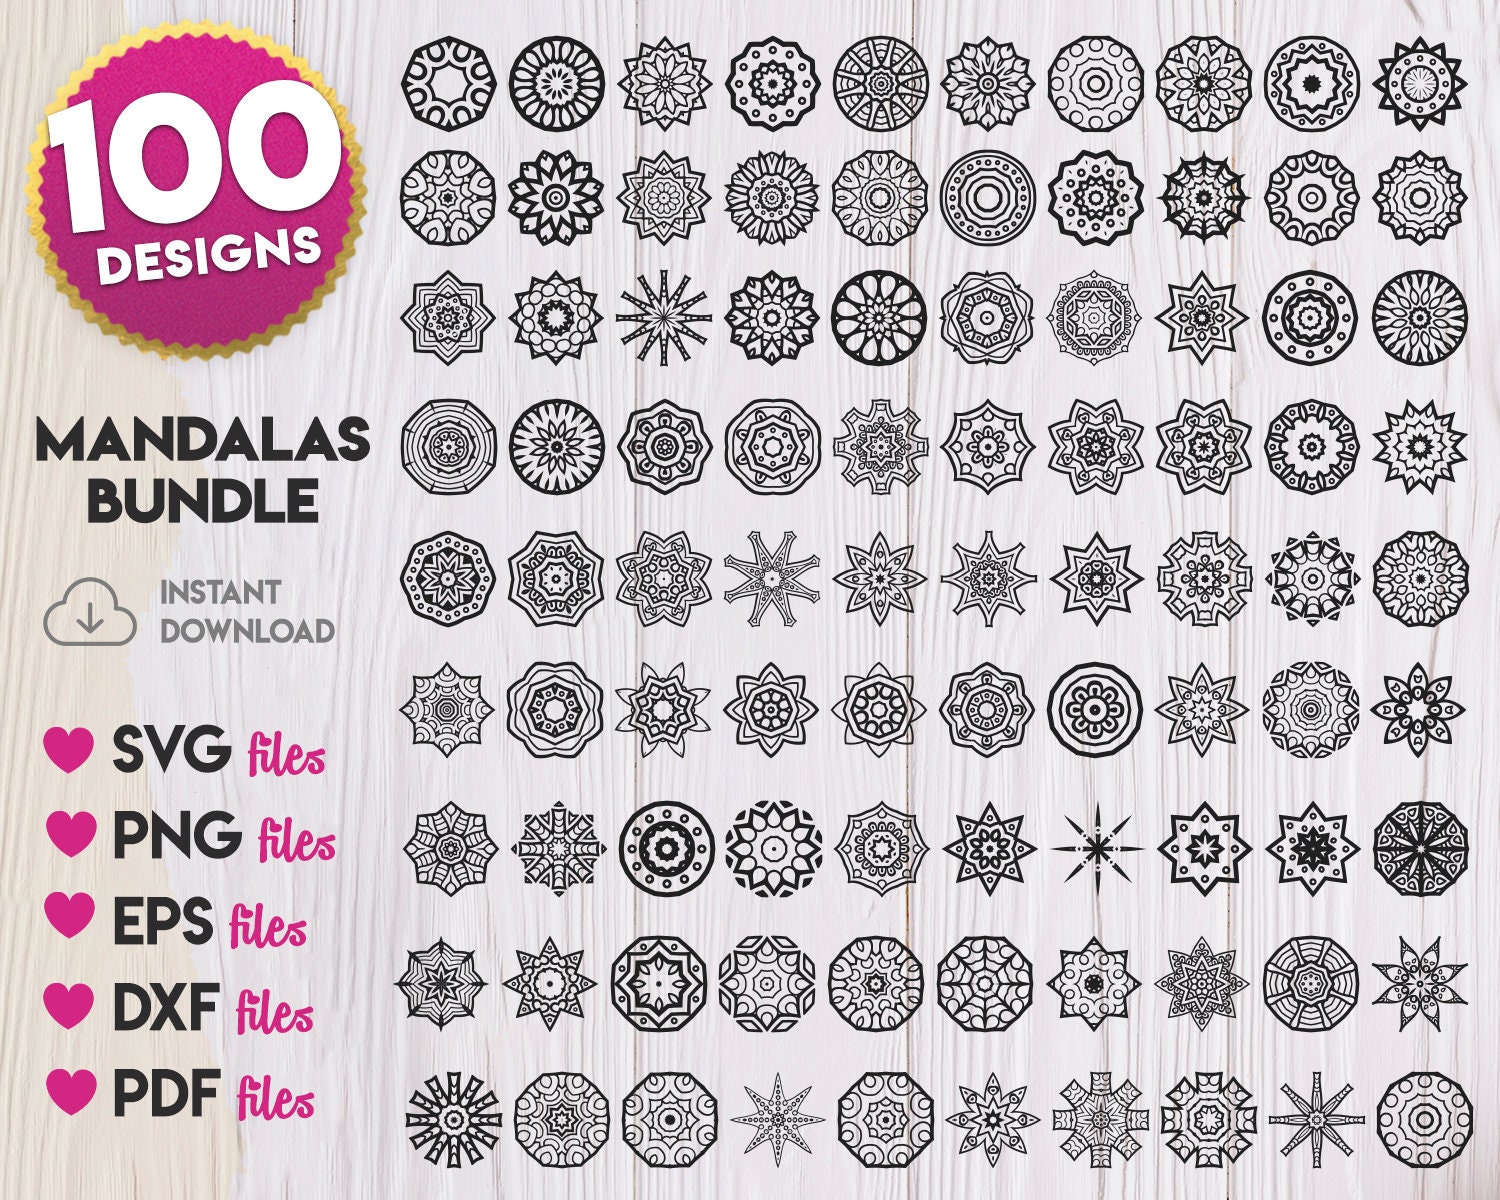 MANDALAS in SVG Format No 2, Mandala Vector, Mandala Silhouette